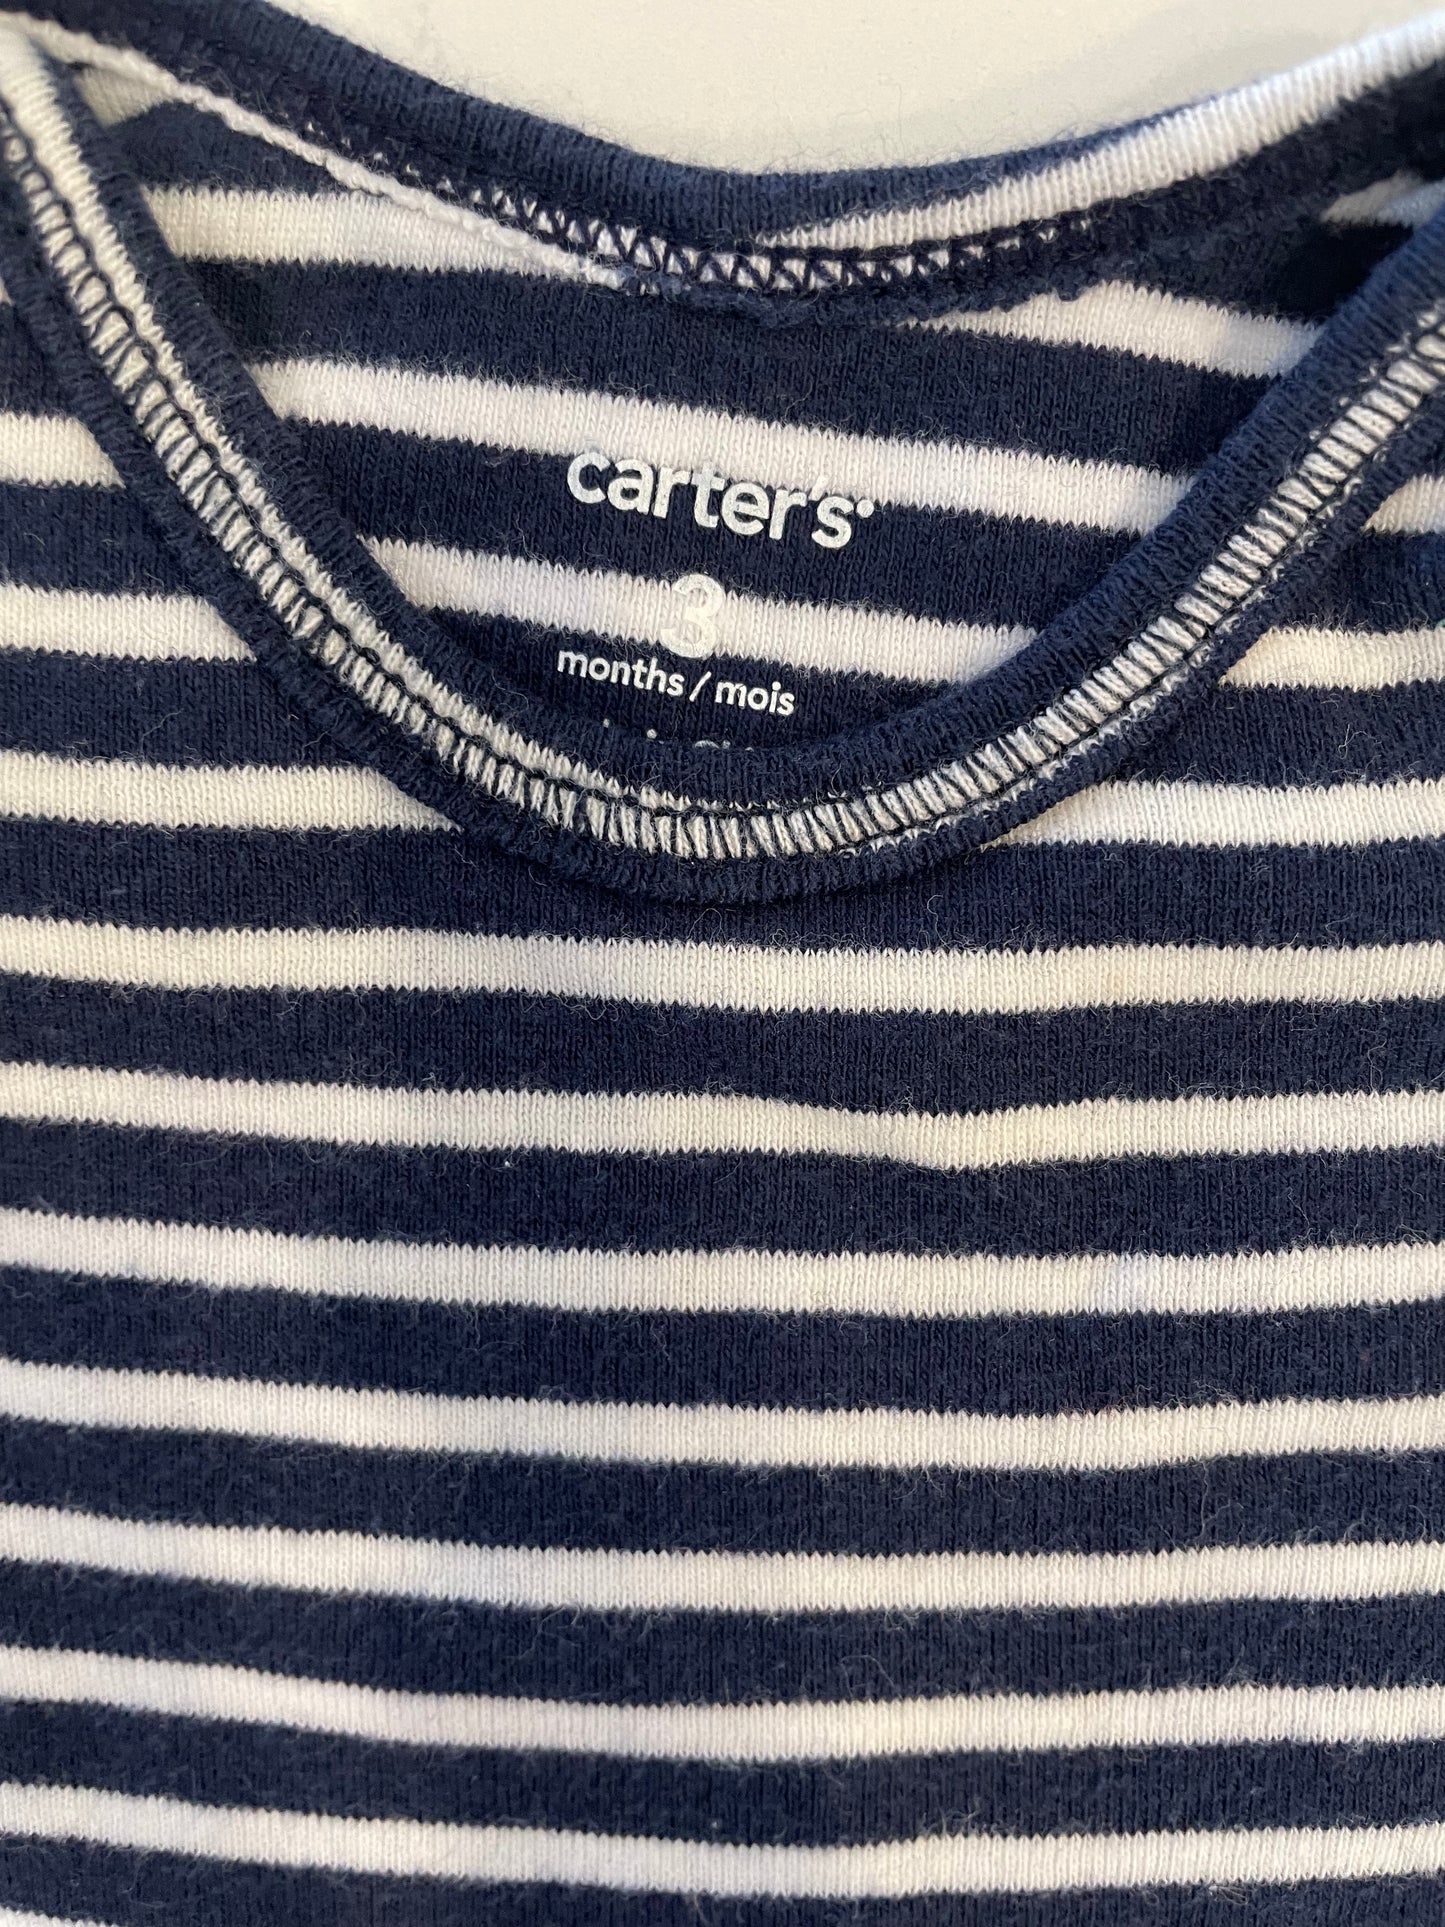 Carters 3 month Diaper Shirt